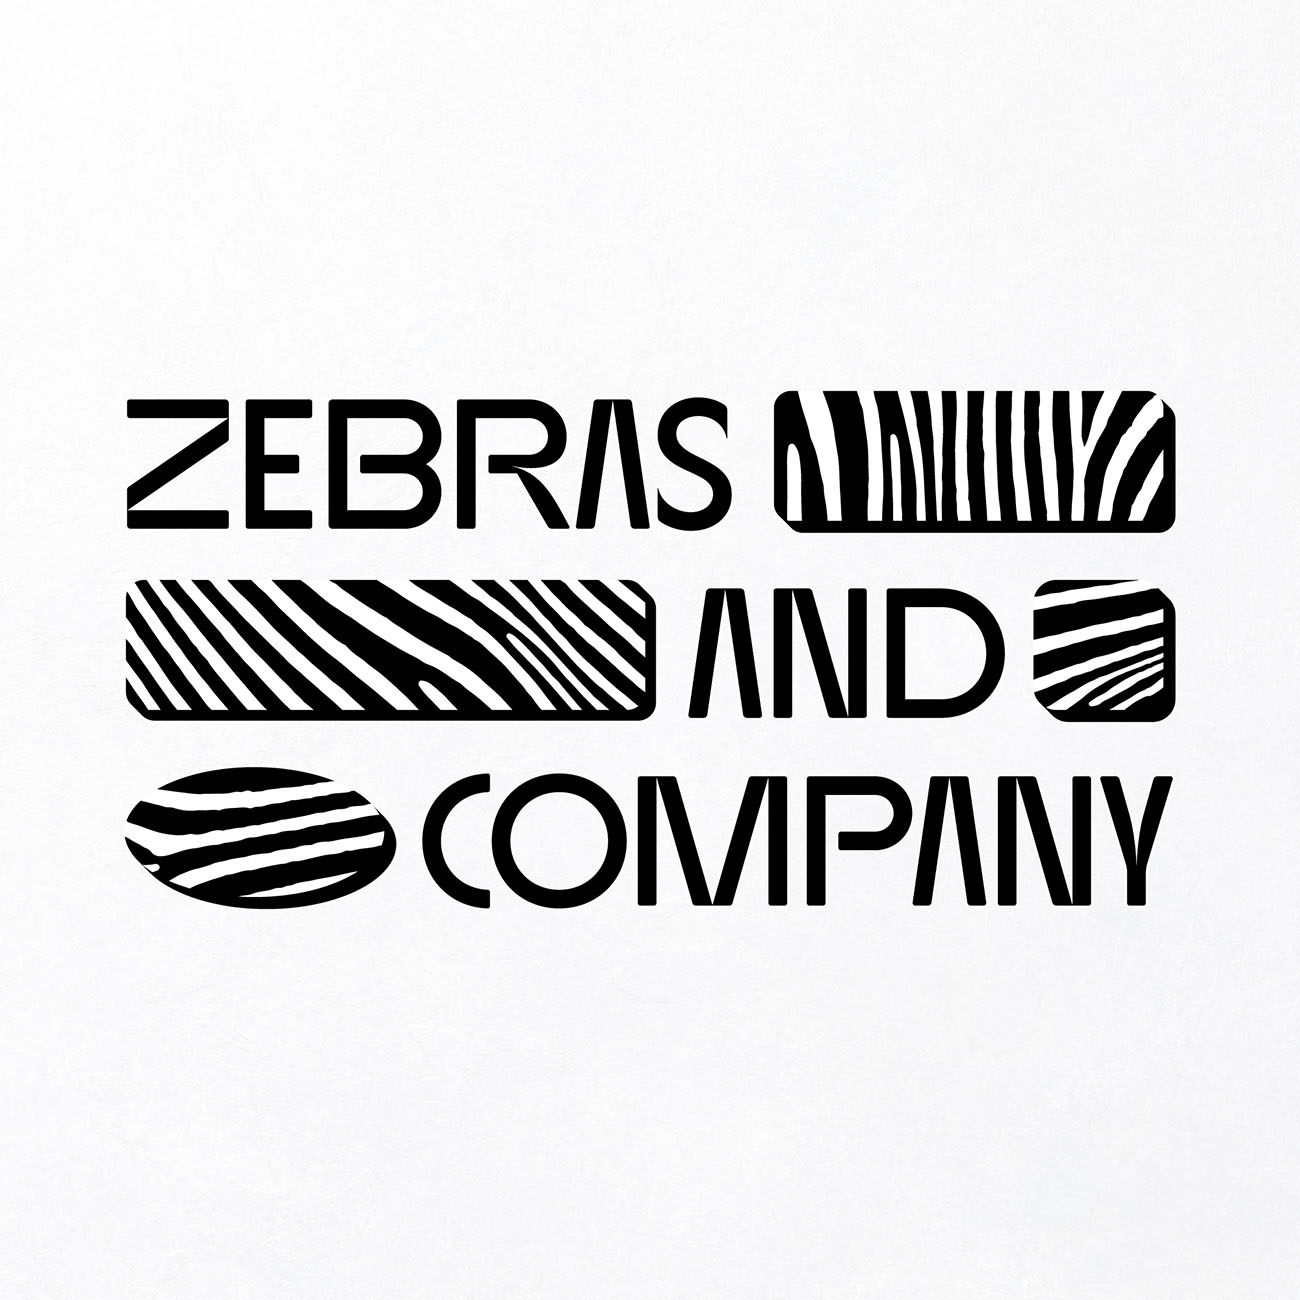 ZEBRAS AND COMPANY